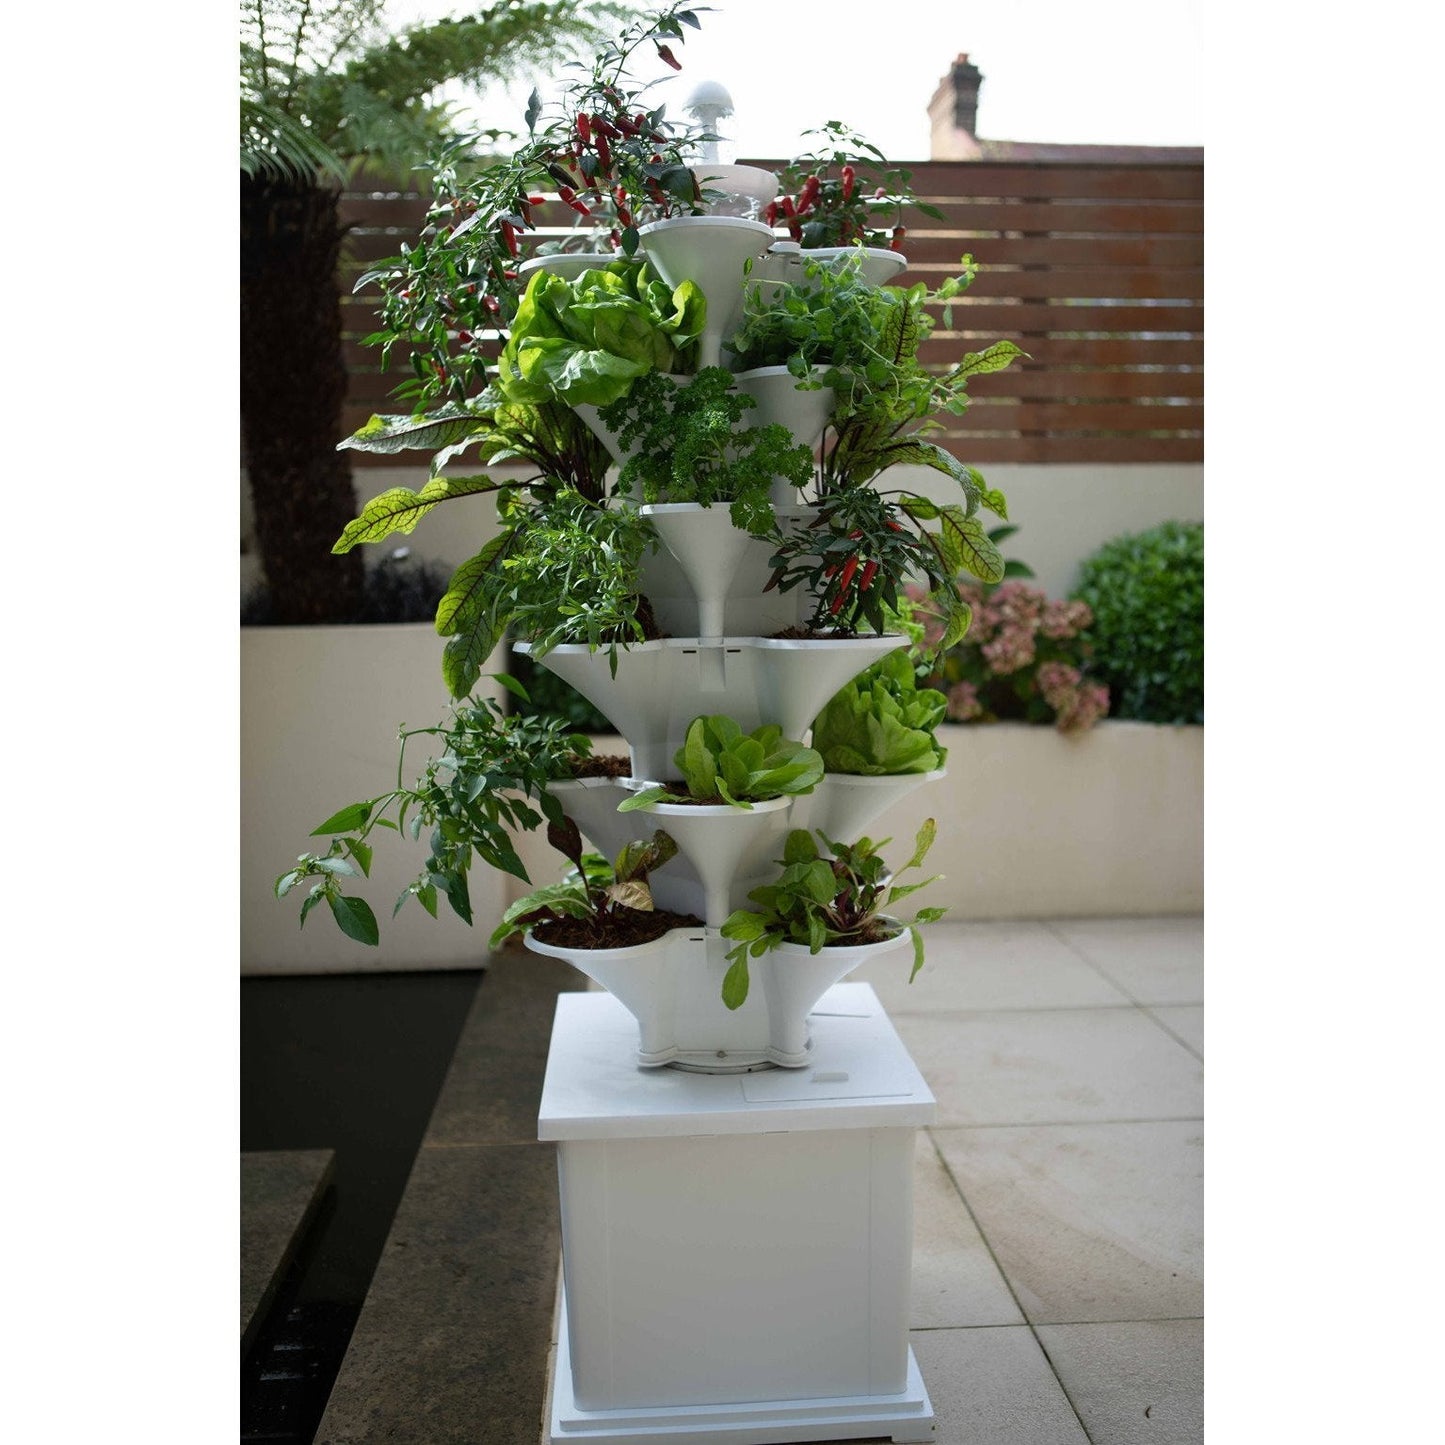 Acqua Garden - Self-Watering Vertical Growing System - AcquaGarden